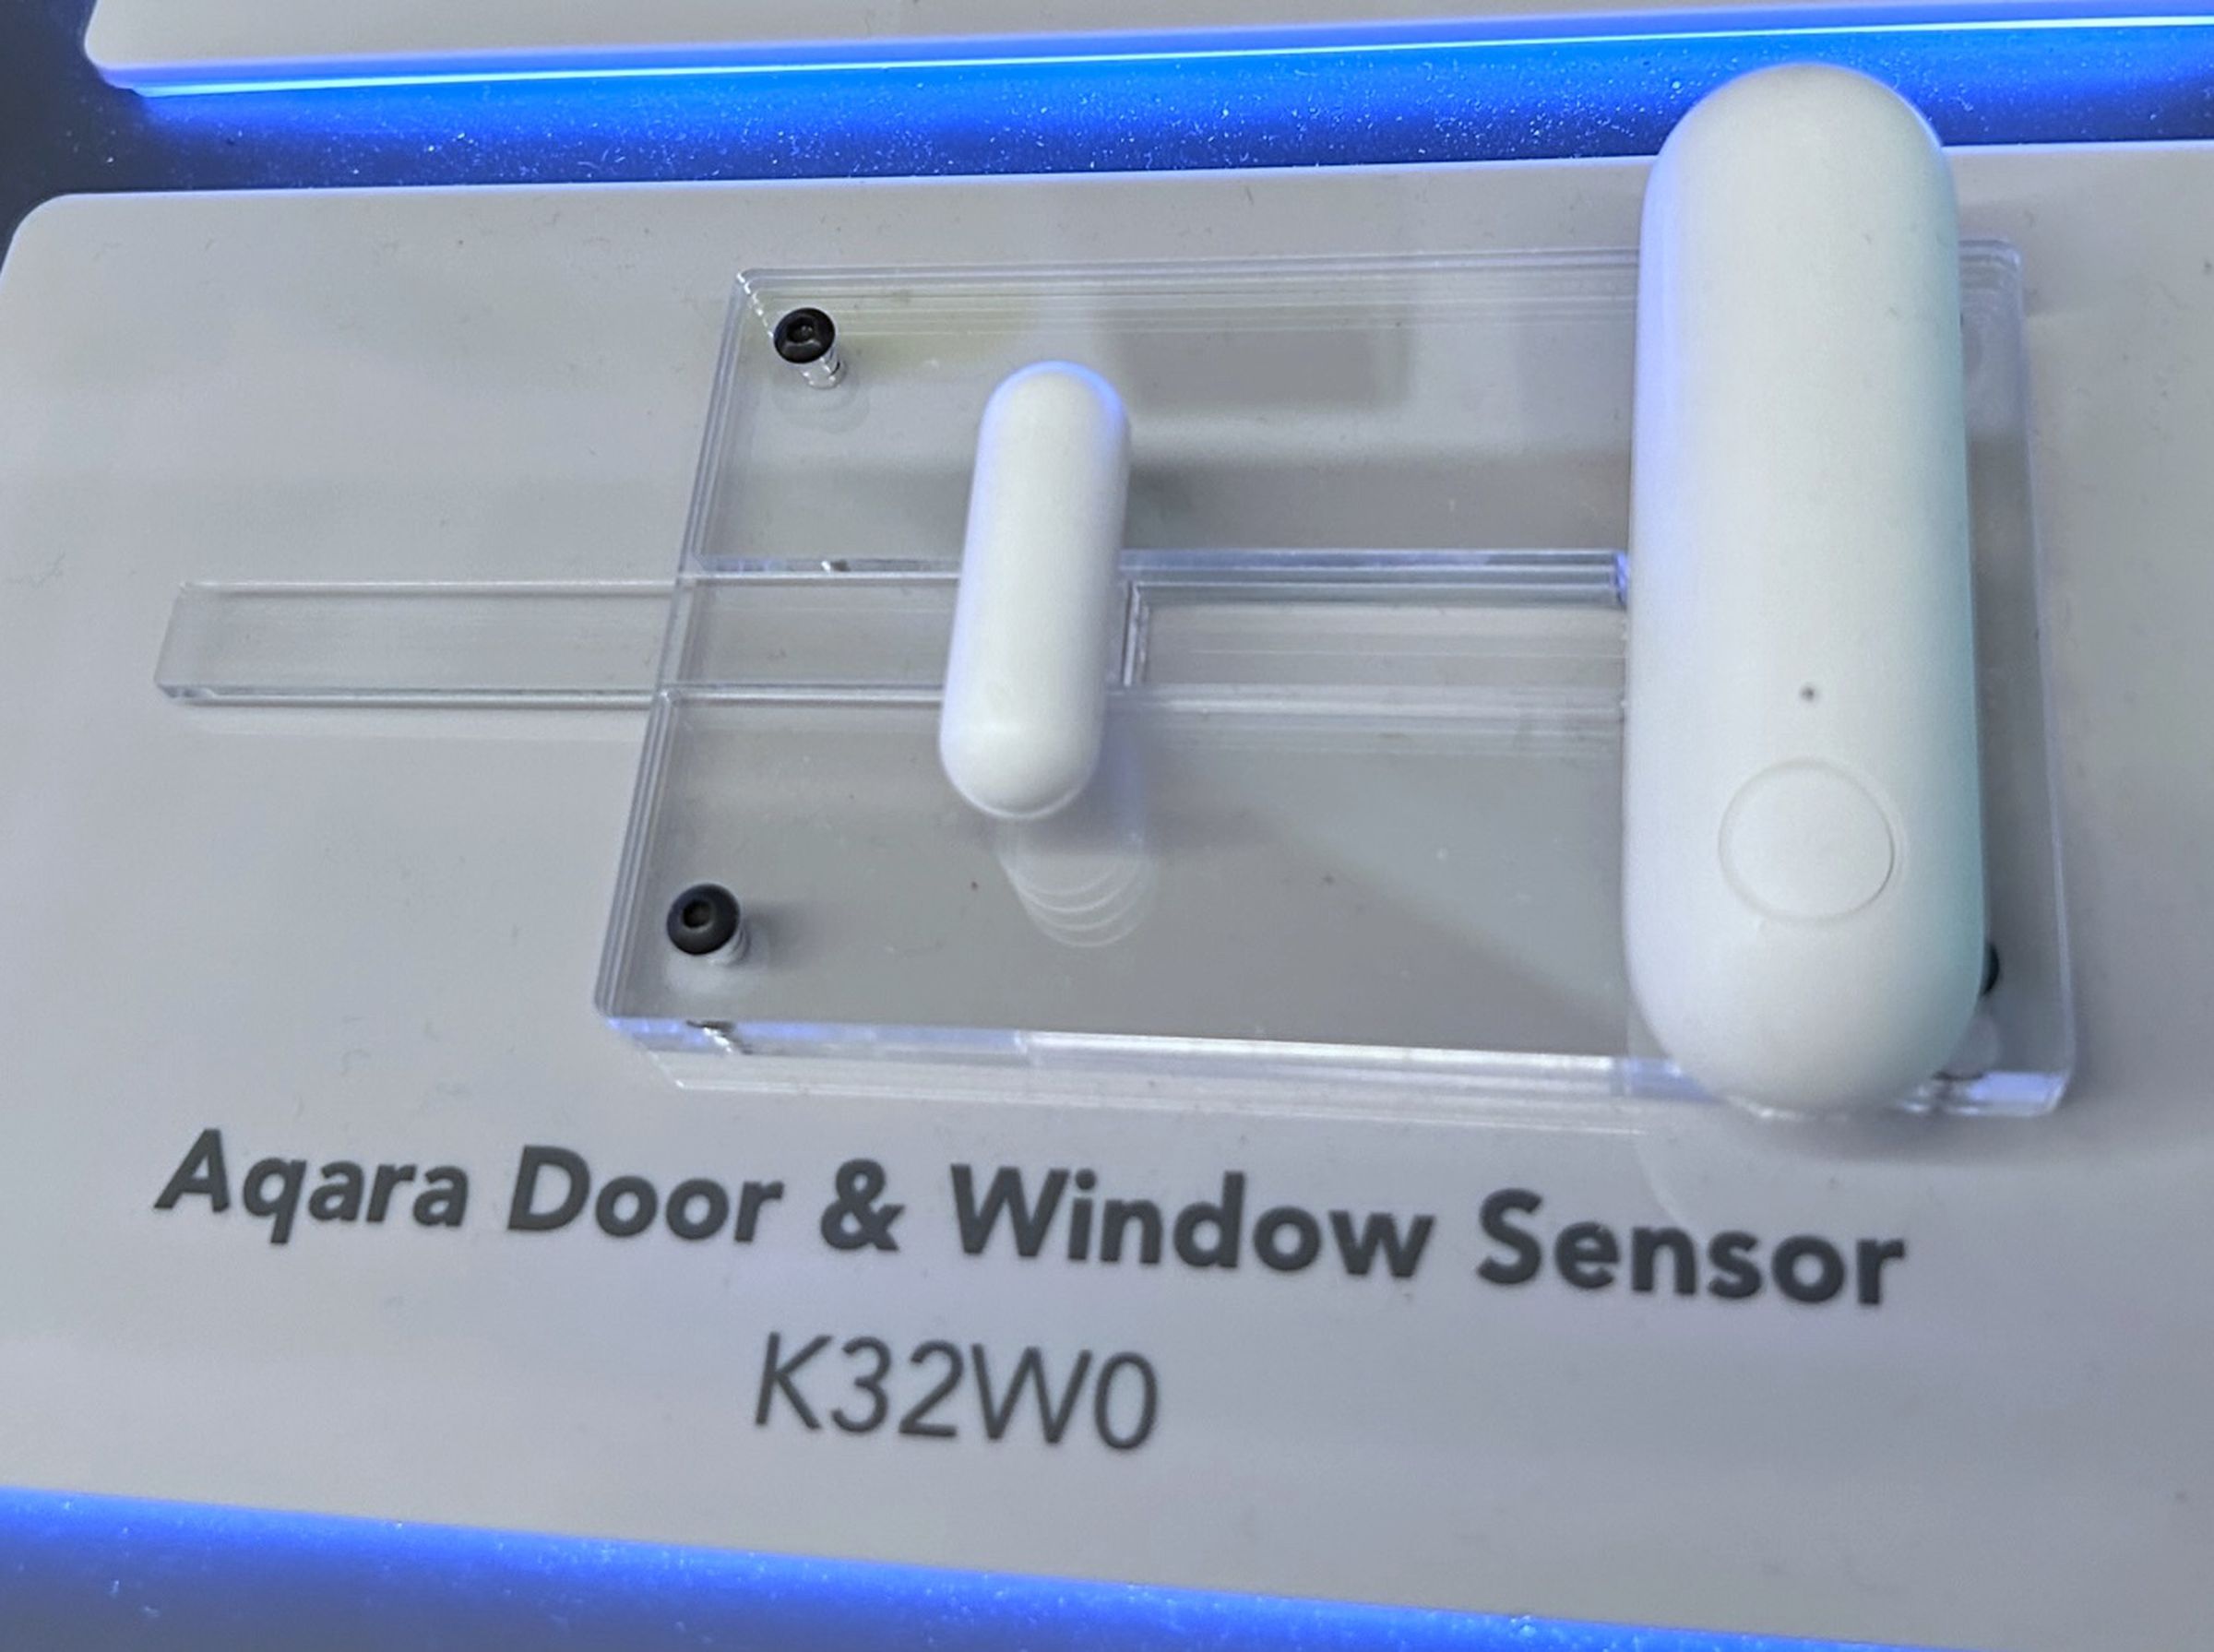 Photo of the Aqara Door and Window Sensor P2 mounted to a plastic demonstration board.